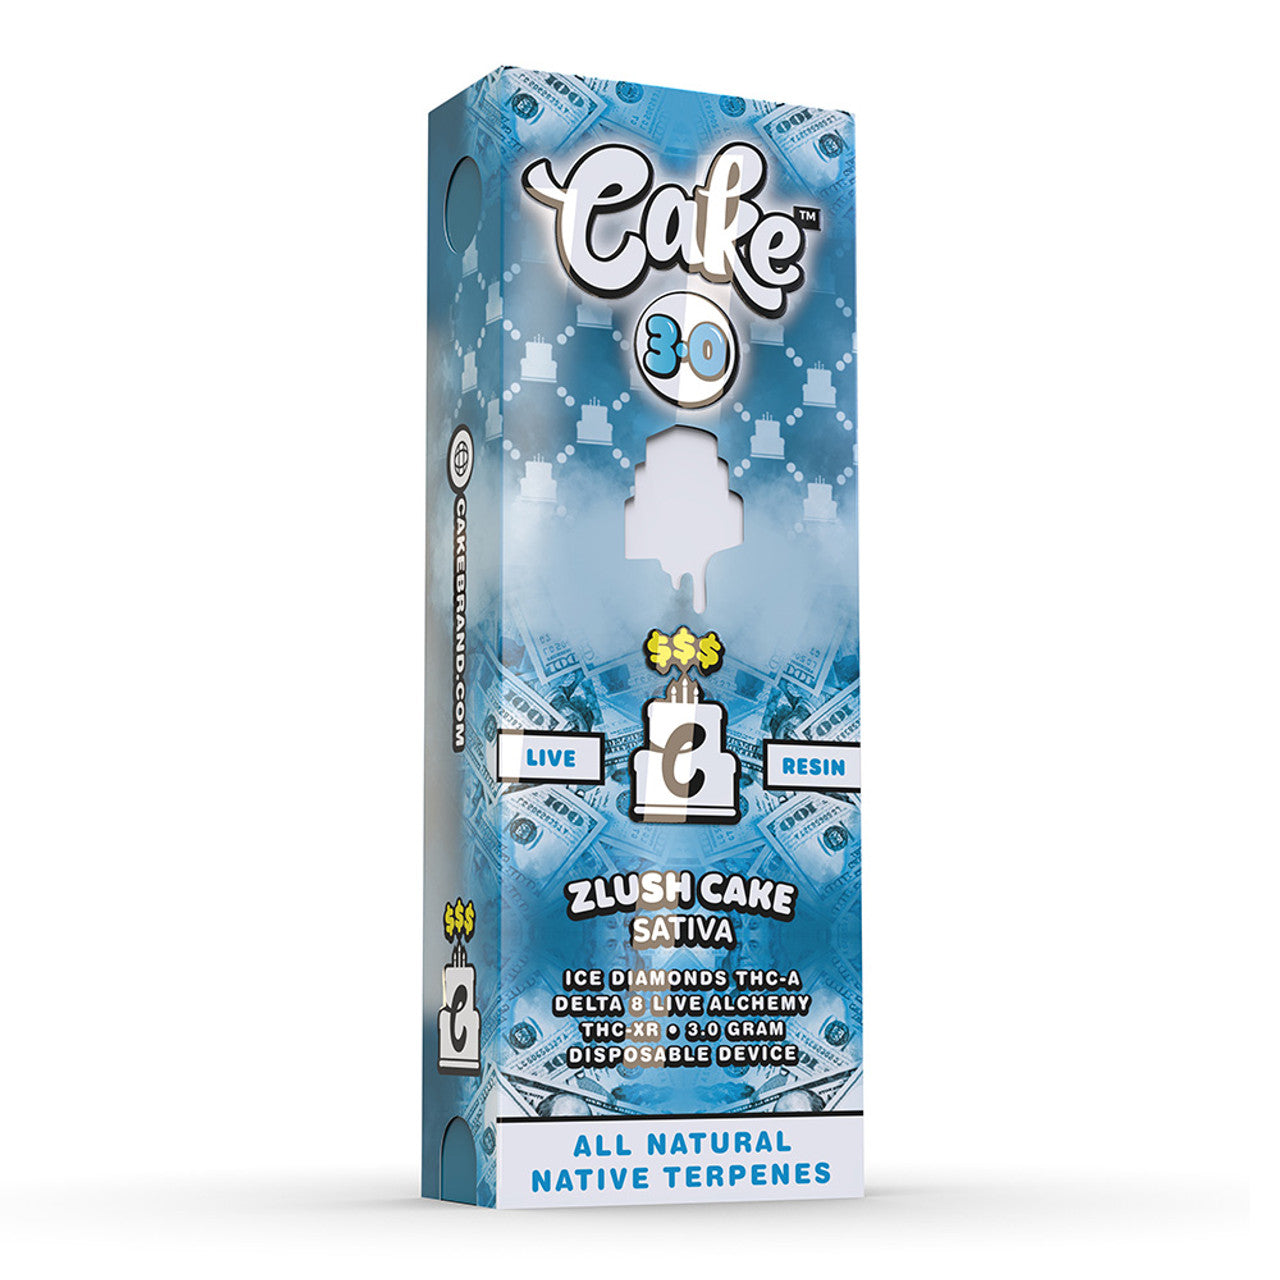 CAKE 3.0 Money Line Live Resin Ice Diamonds THC-A + Delta 8 Live Alchemy + THC-XR Disposable 3G - Zlush Cake (Sativa) 